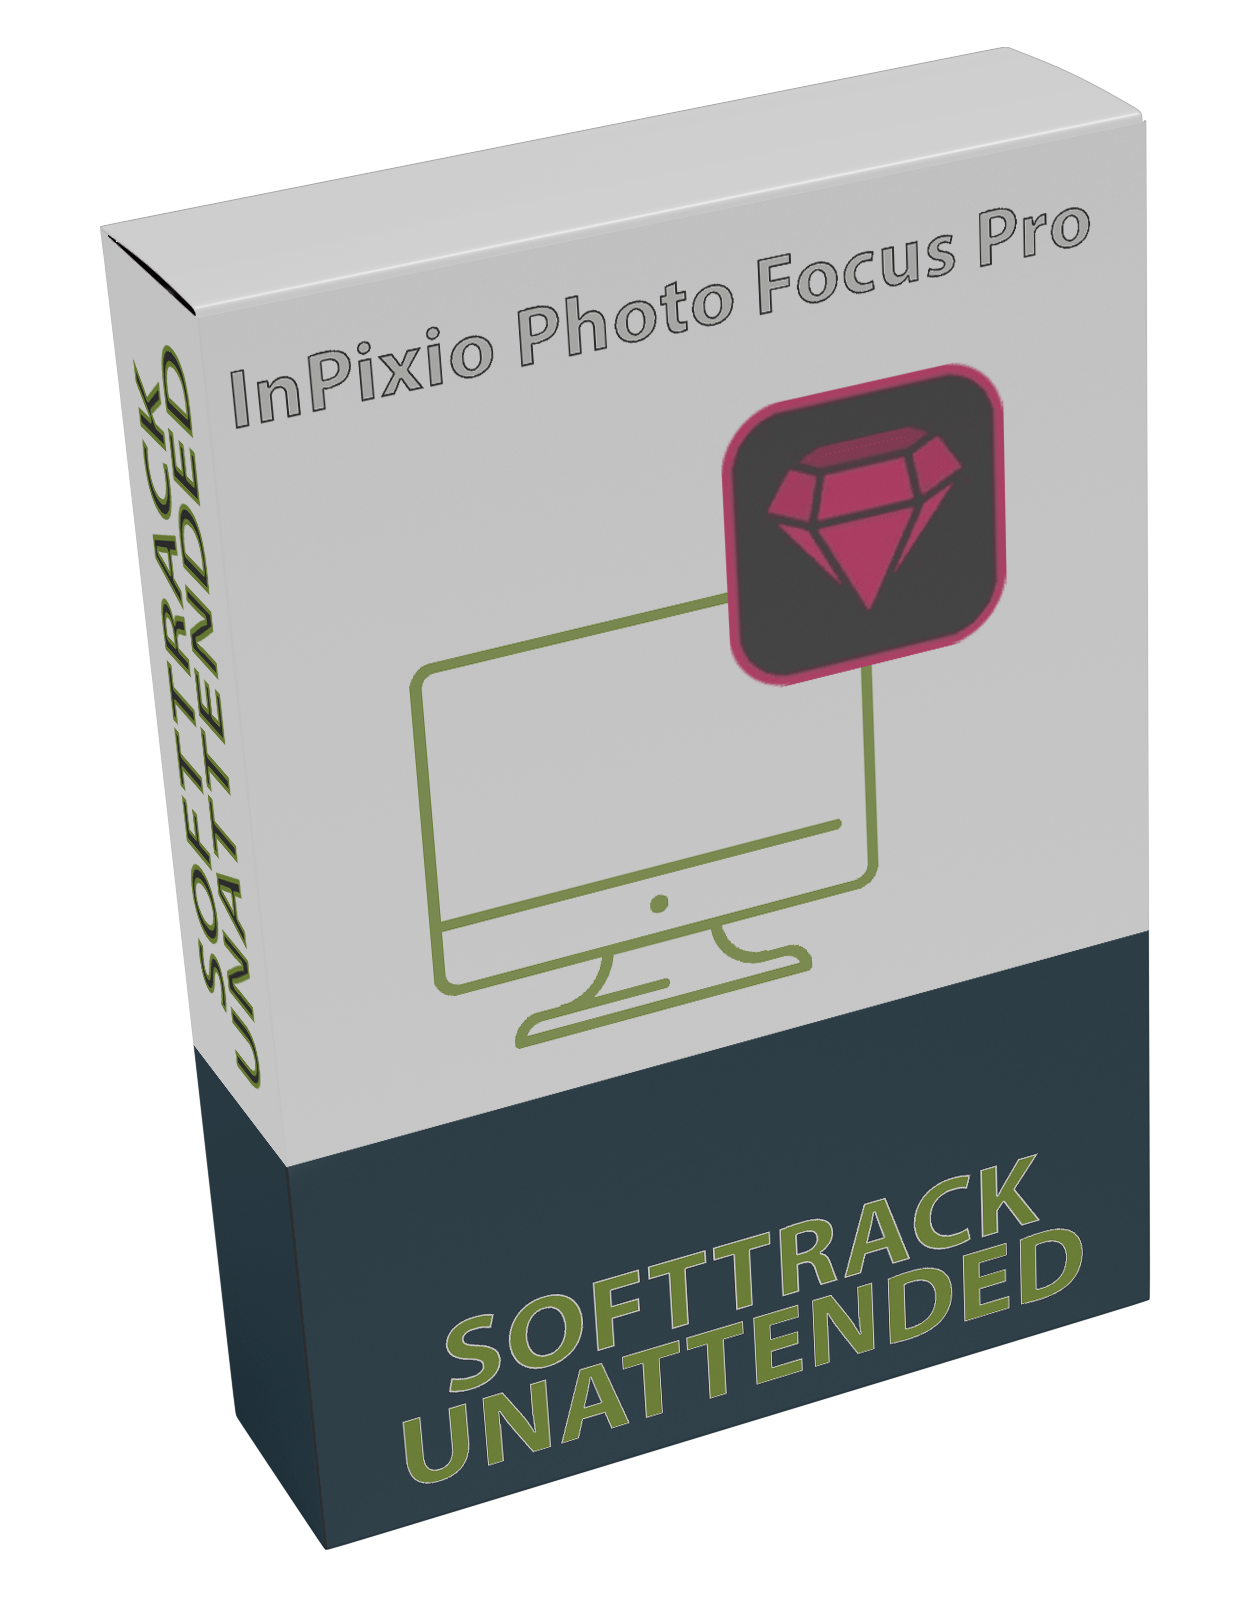 InPixio Photo Focus Pro 4.2.7759.21167 UNATTENDED